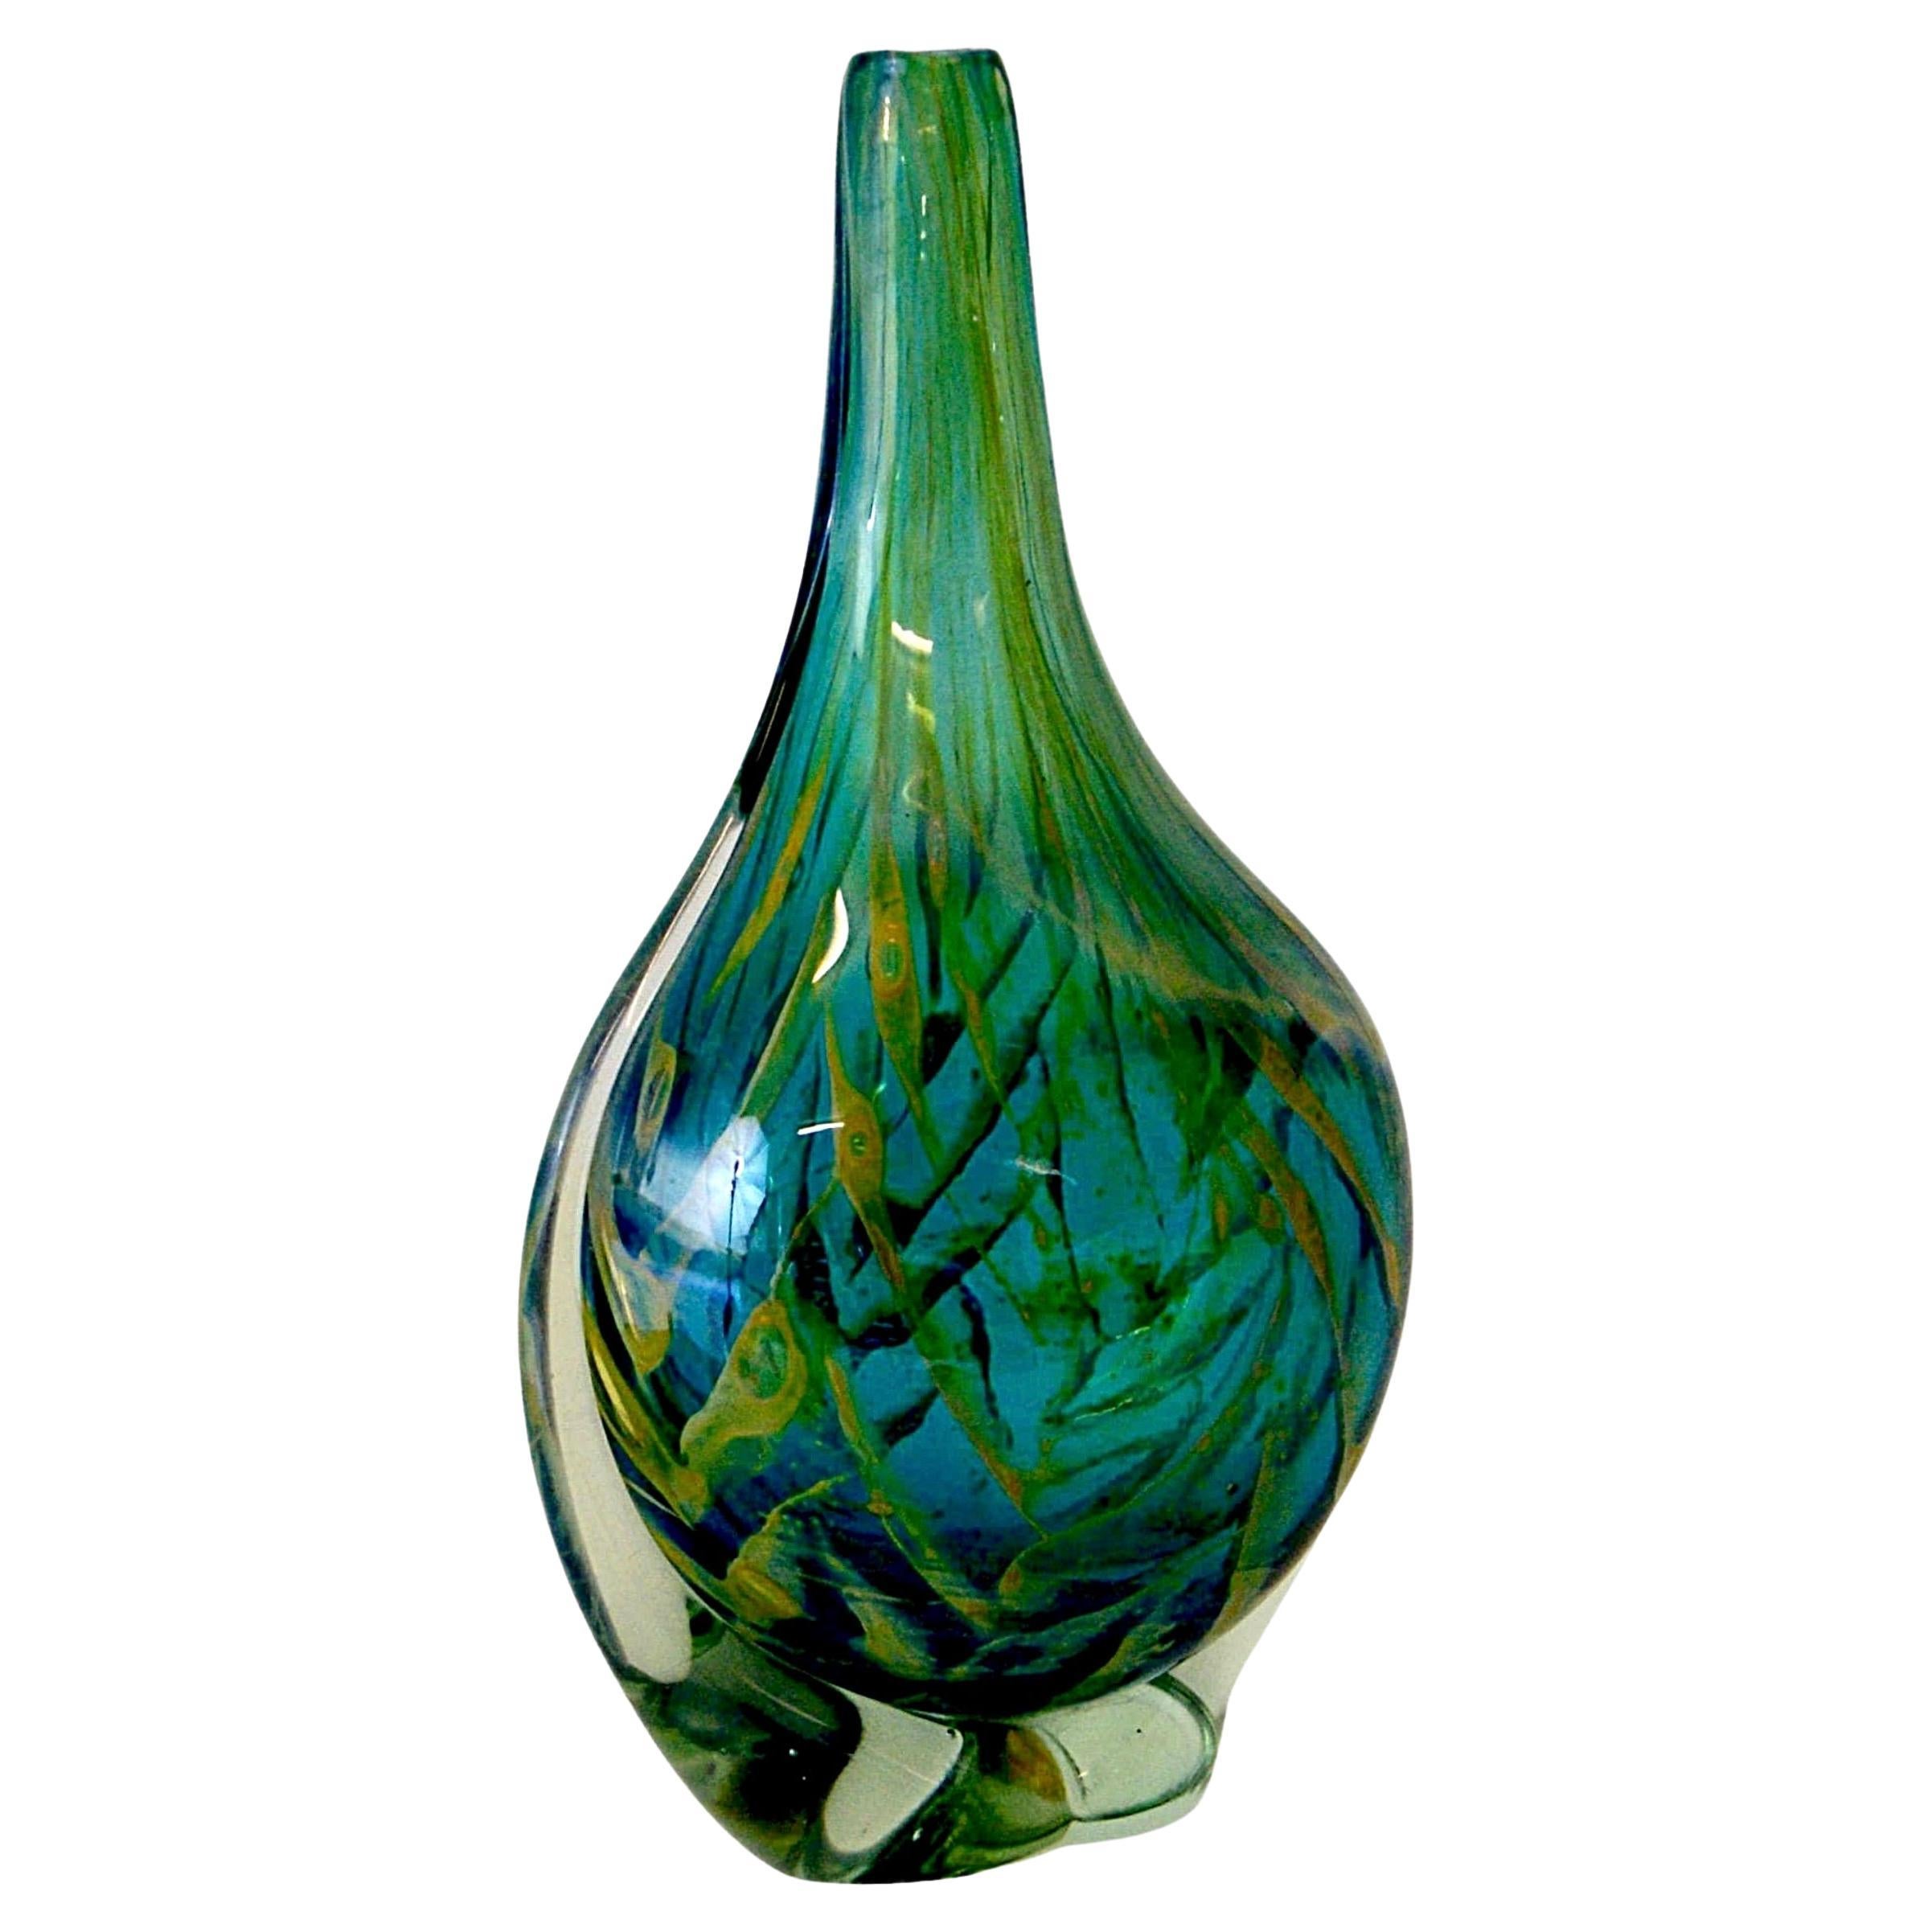 Vintage Mdina Fish Vase by Michael Harris 1970s